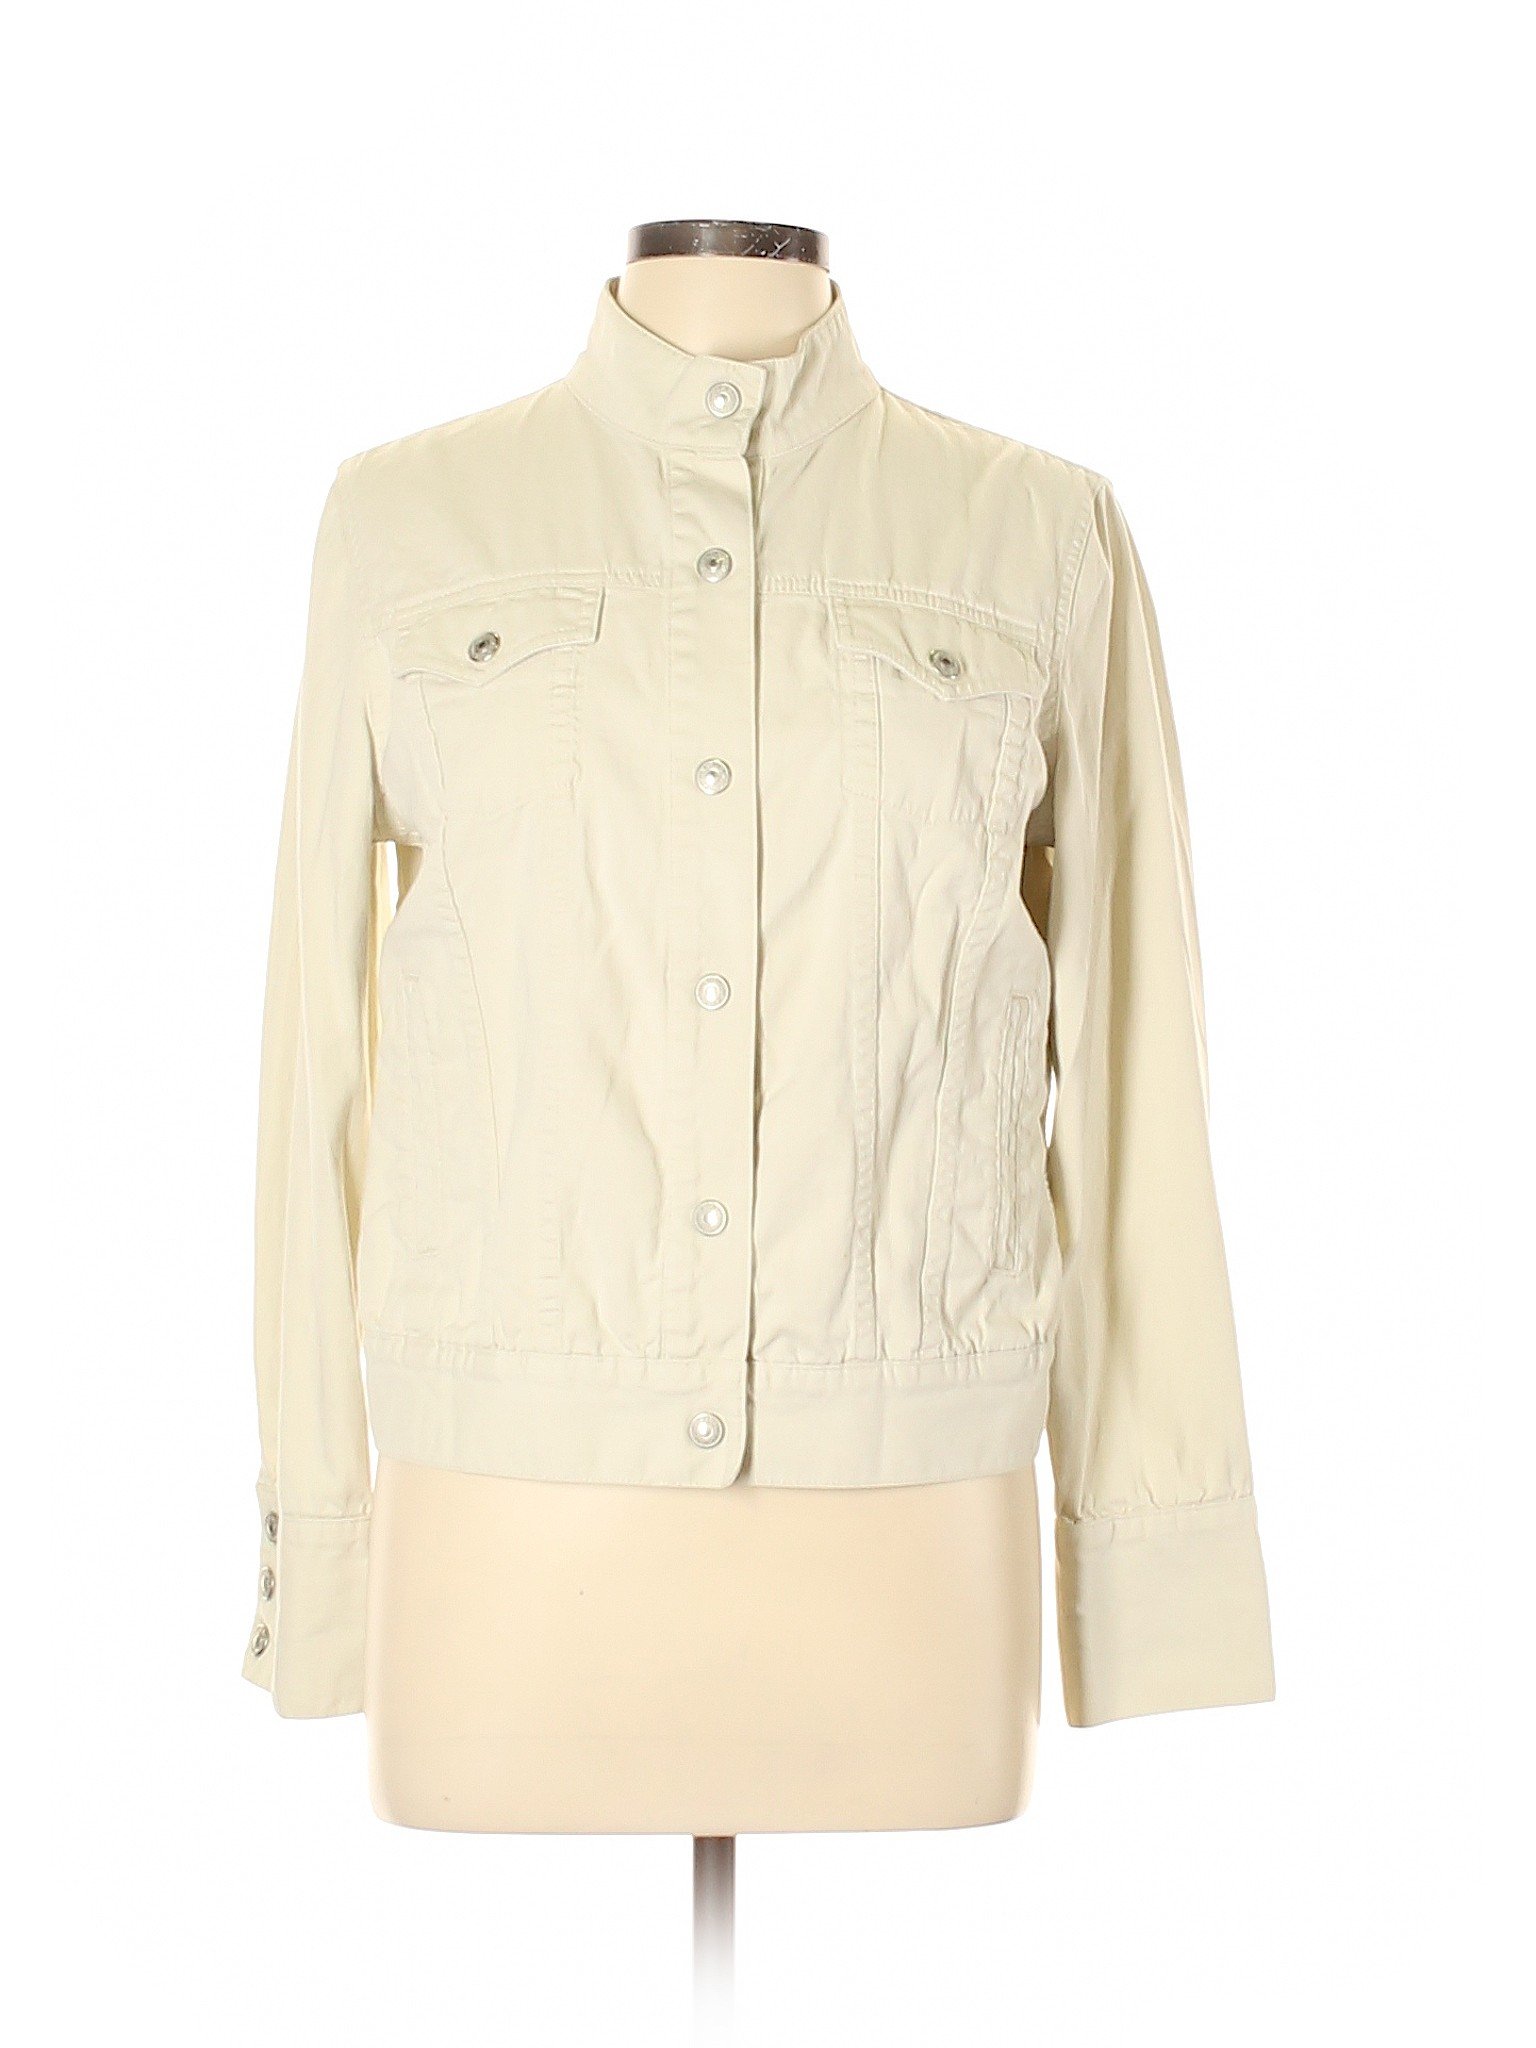 Gap 100% Cotton Solid Ivory Denim Jacket Size M - 77% off | thredUP